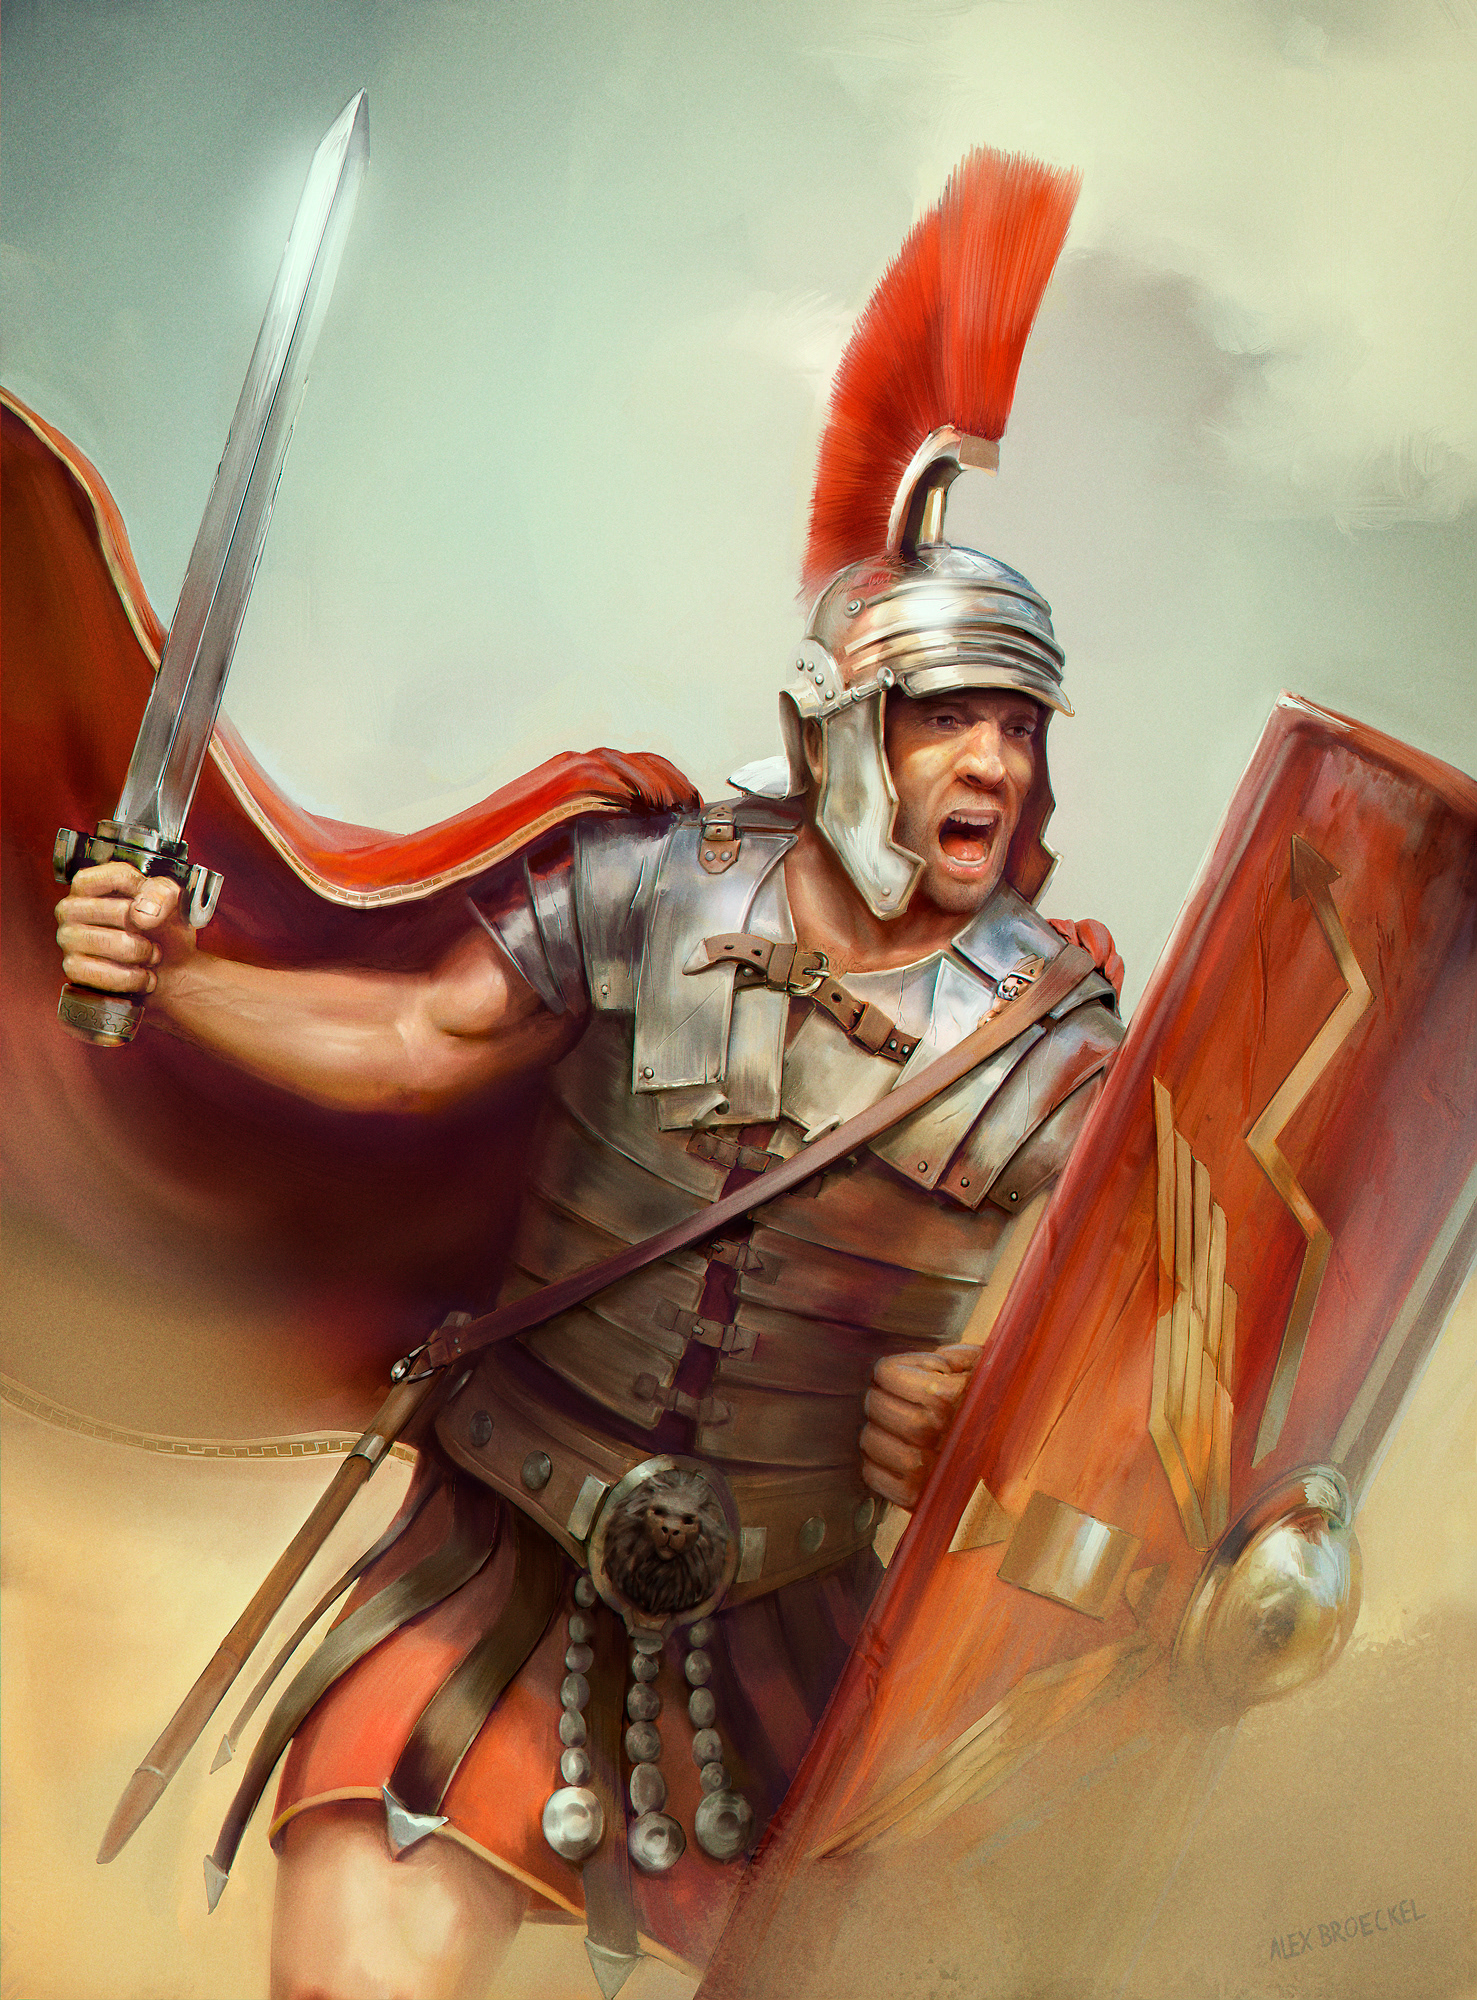 Alex Broeckel - Roman Soldier 2D illustration